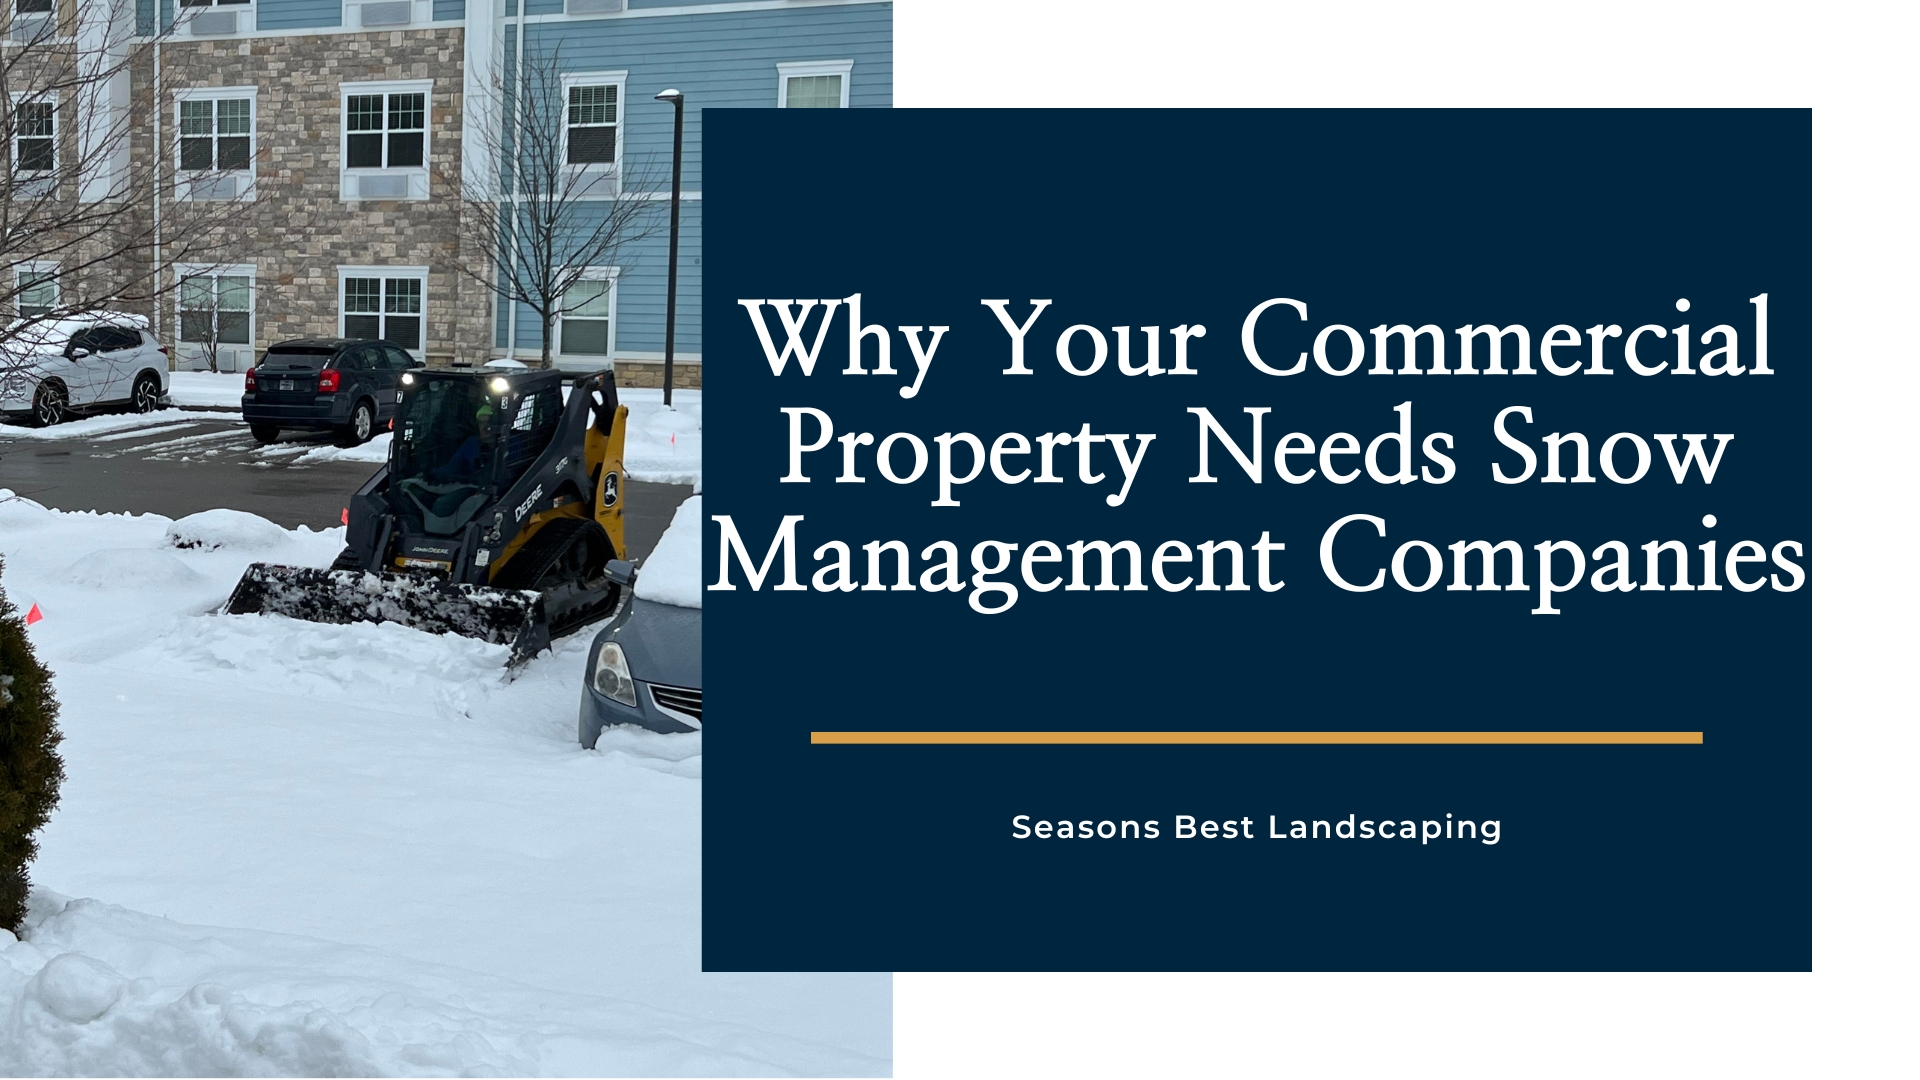 Snow Management Companies Image - Seasons Best Landscaping